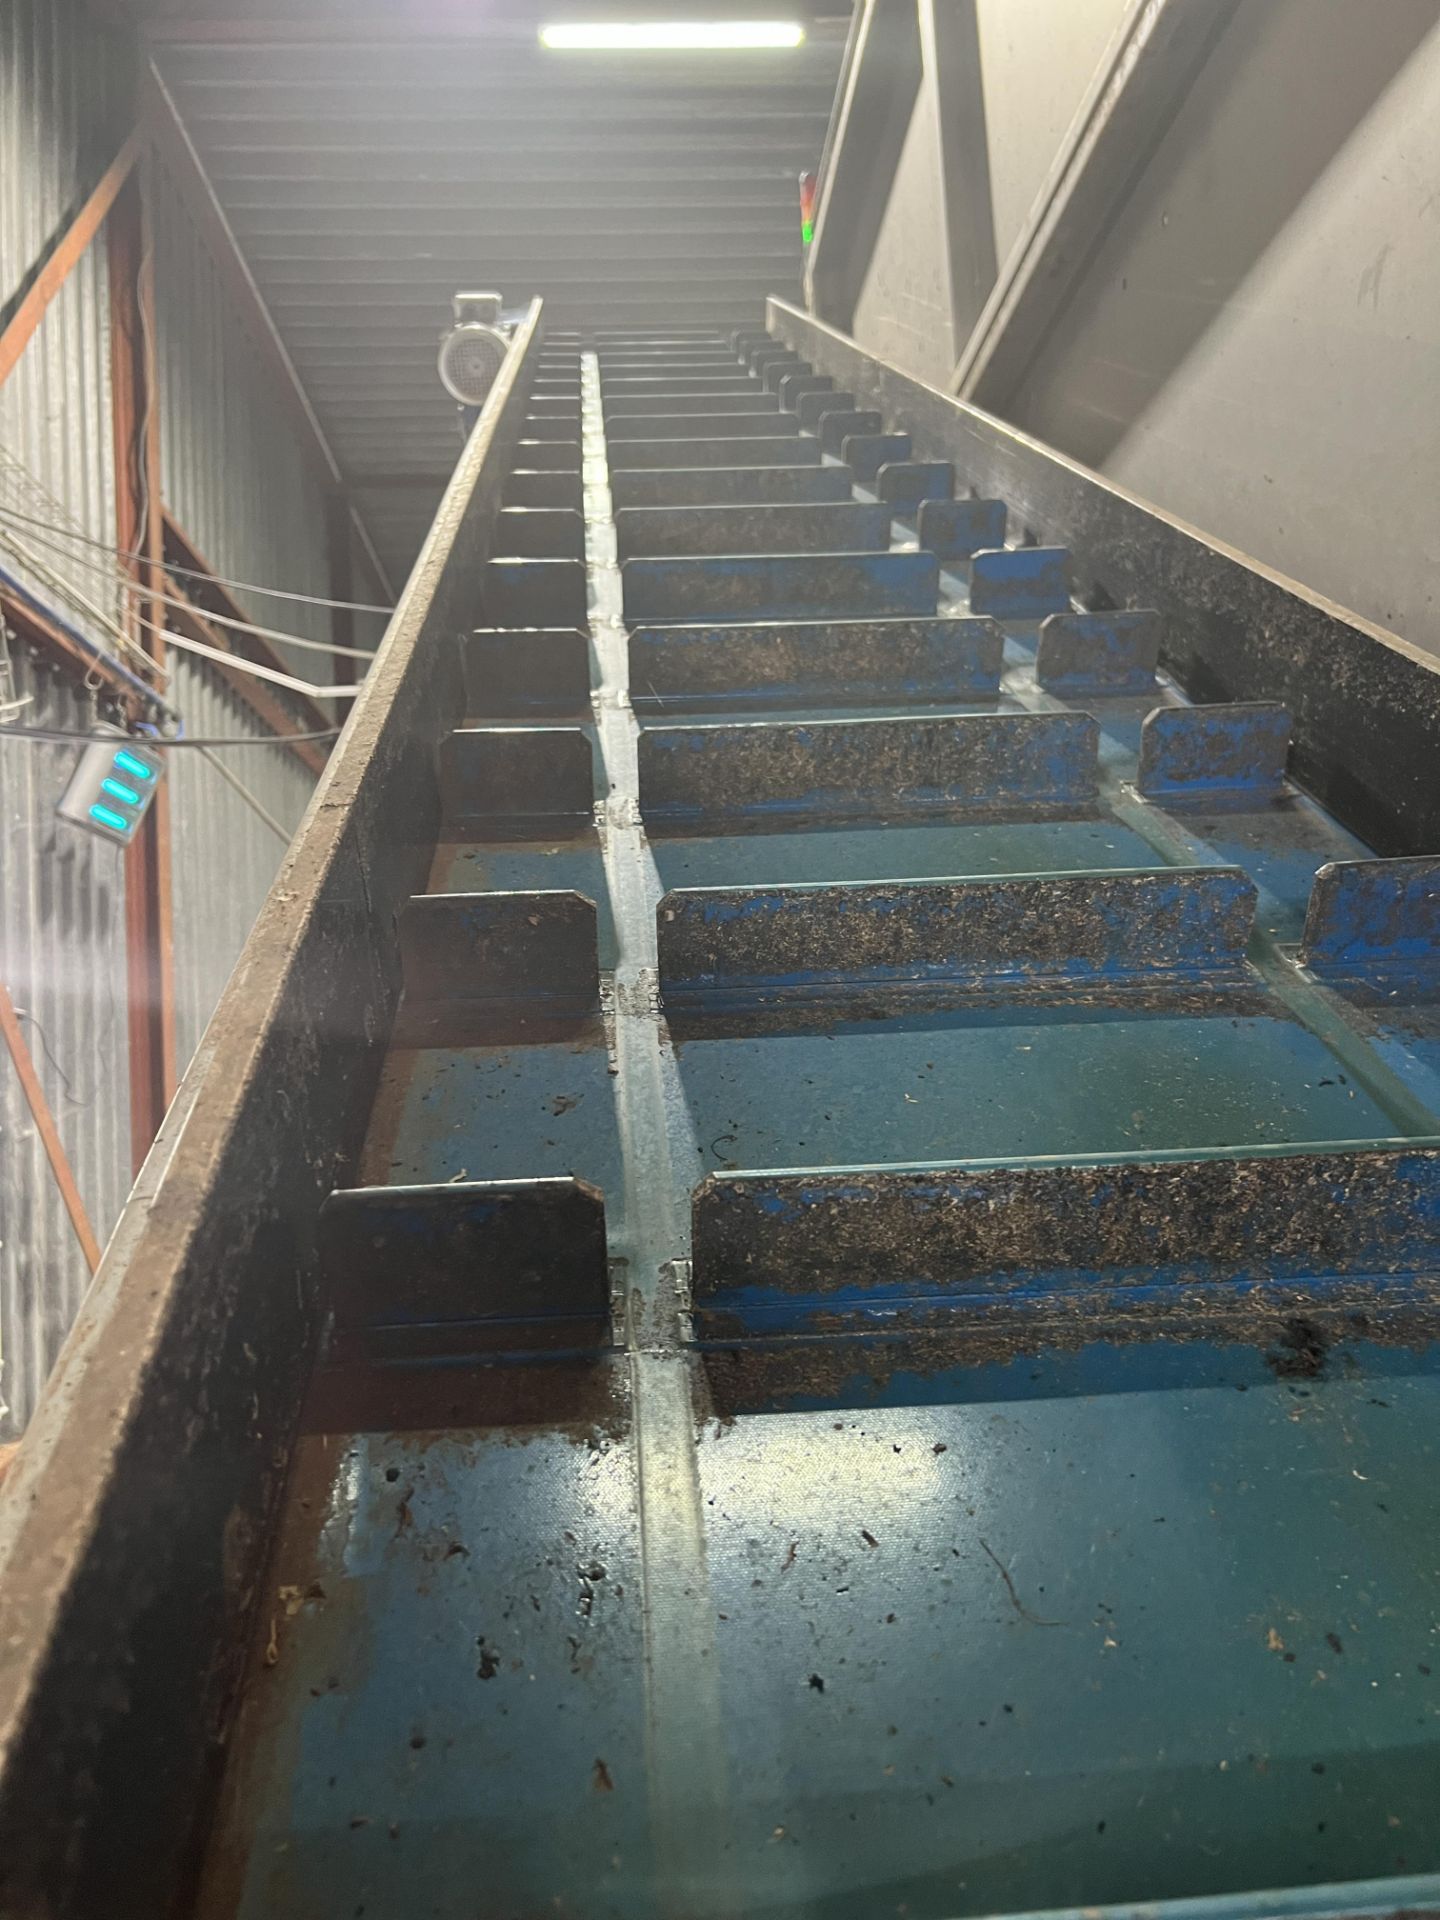 Elevator conveyor - Image 2 of 2